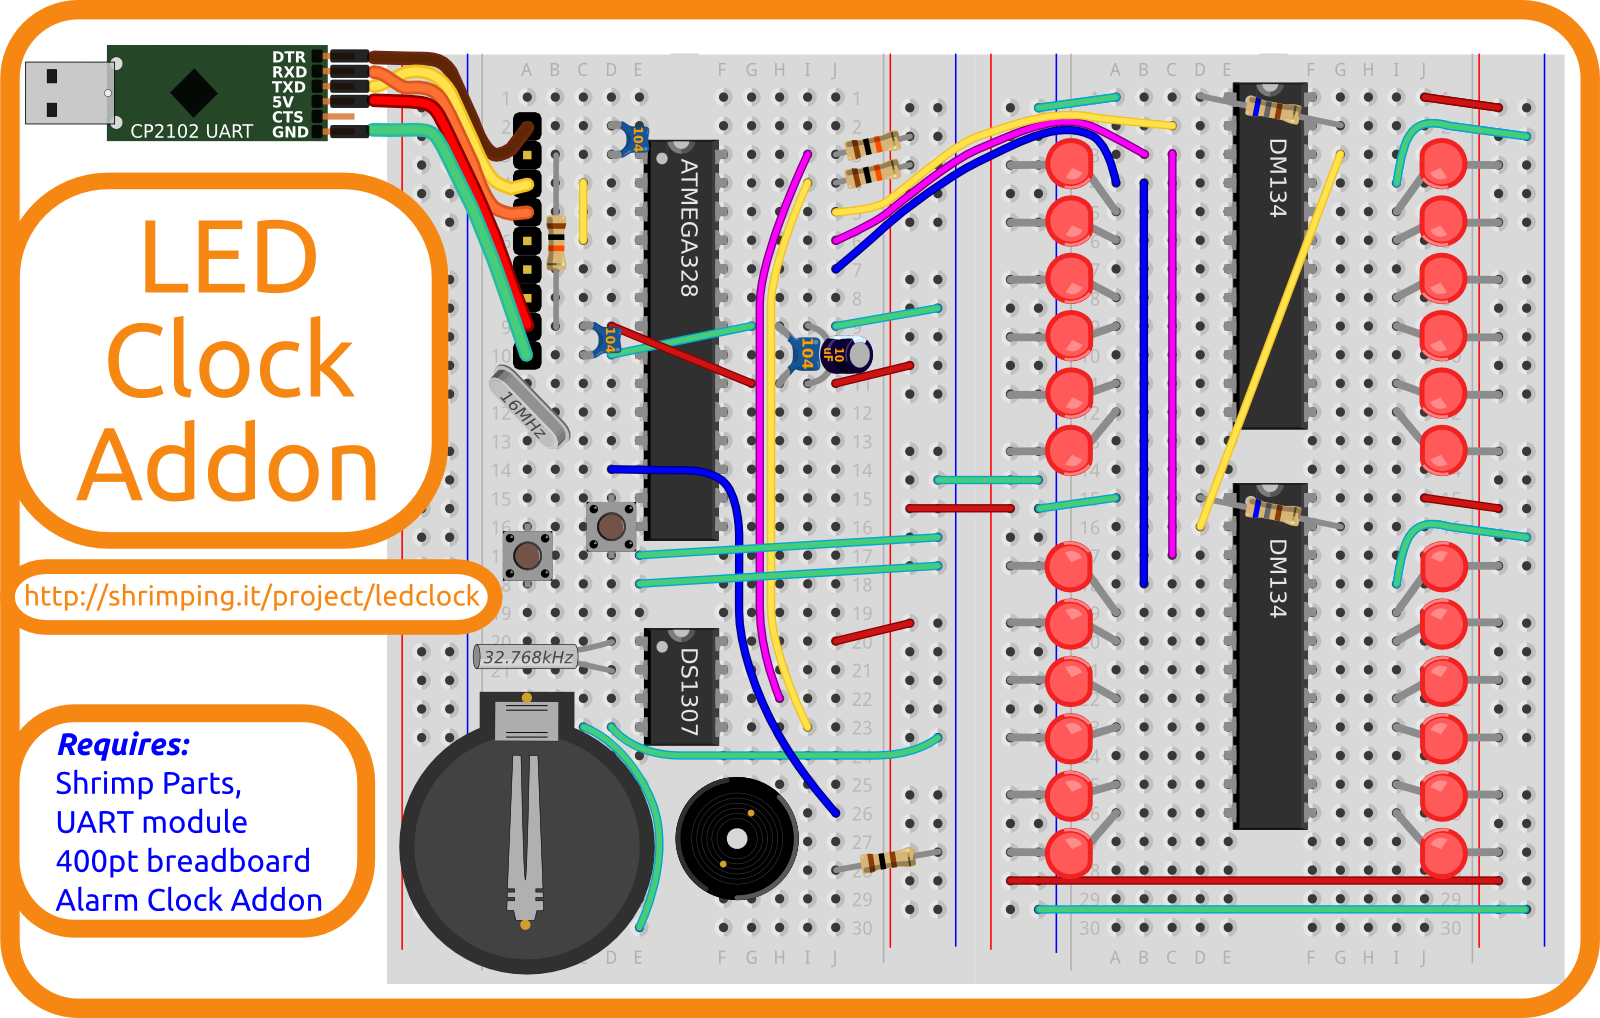 Build diagram for LED Clock